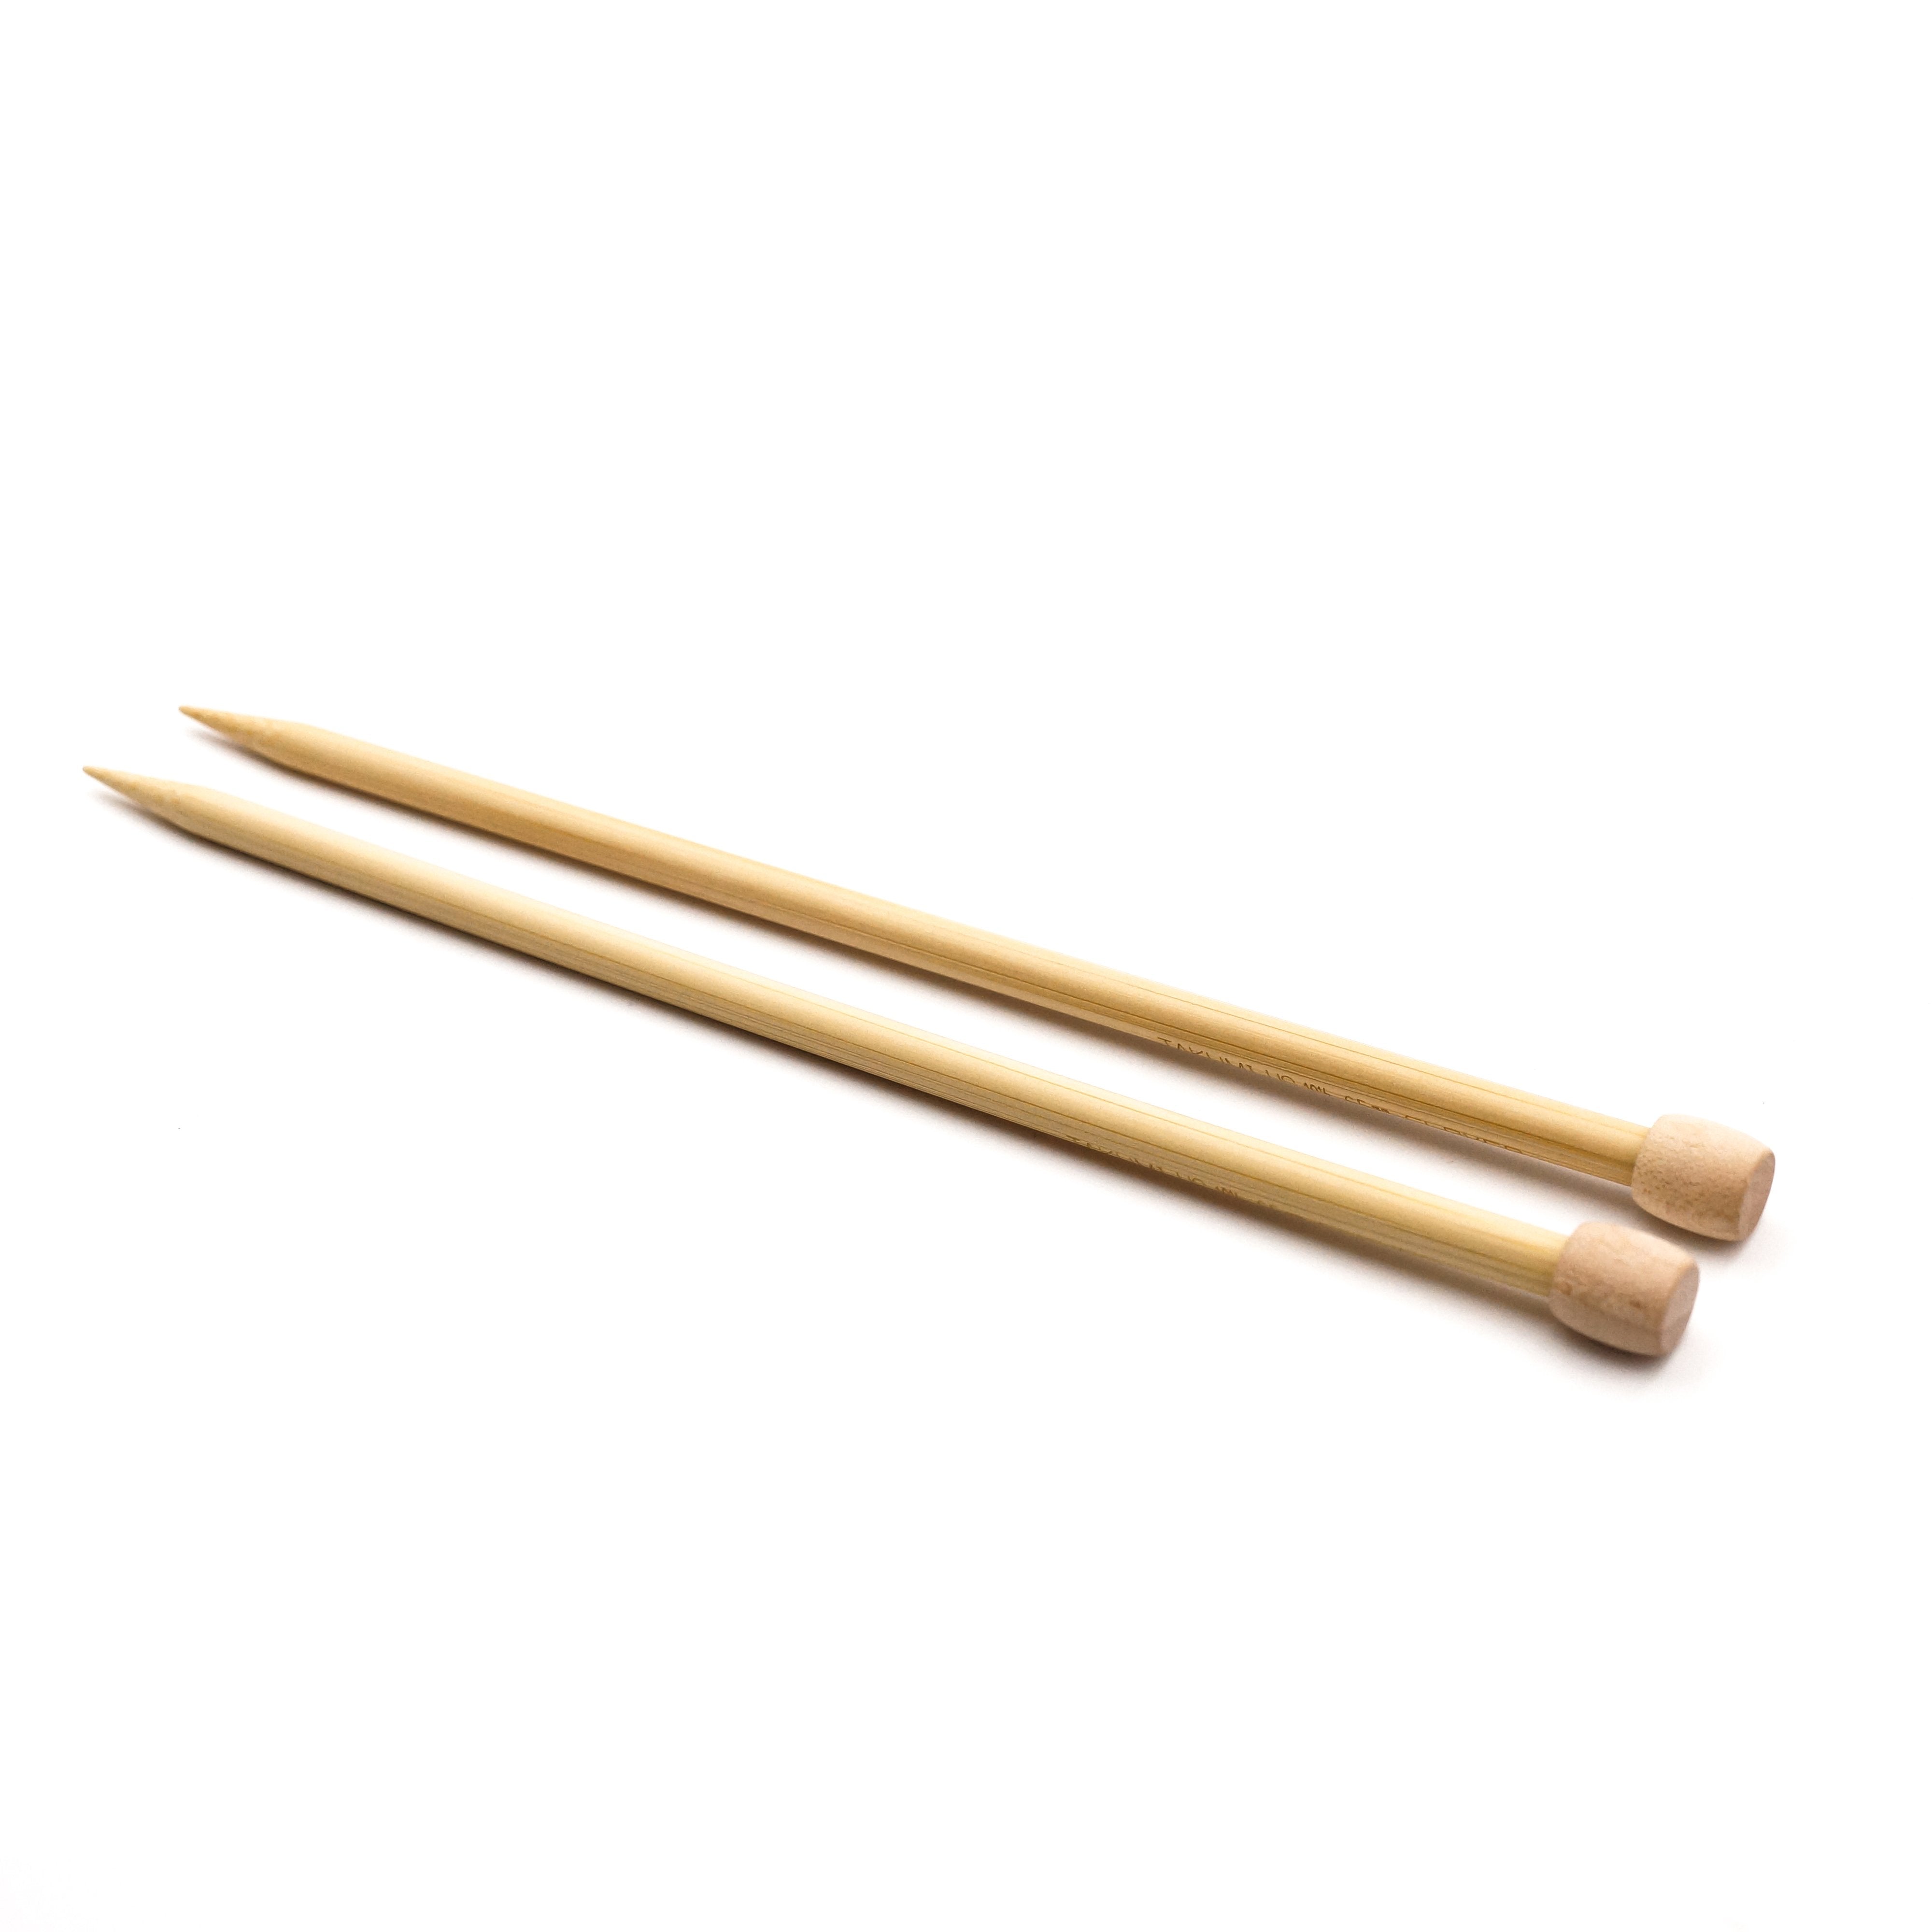 Clover Takumi Single Point Bamboo Knitting Needles - 9 Size 5